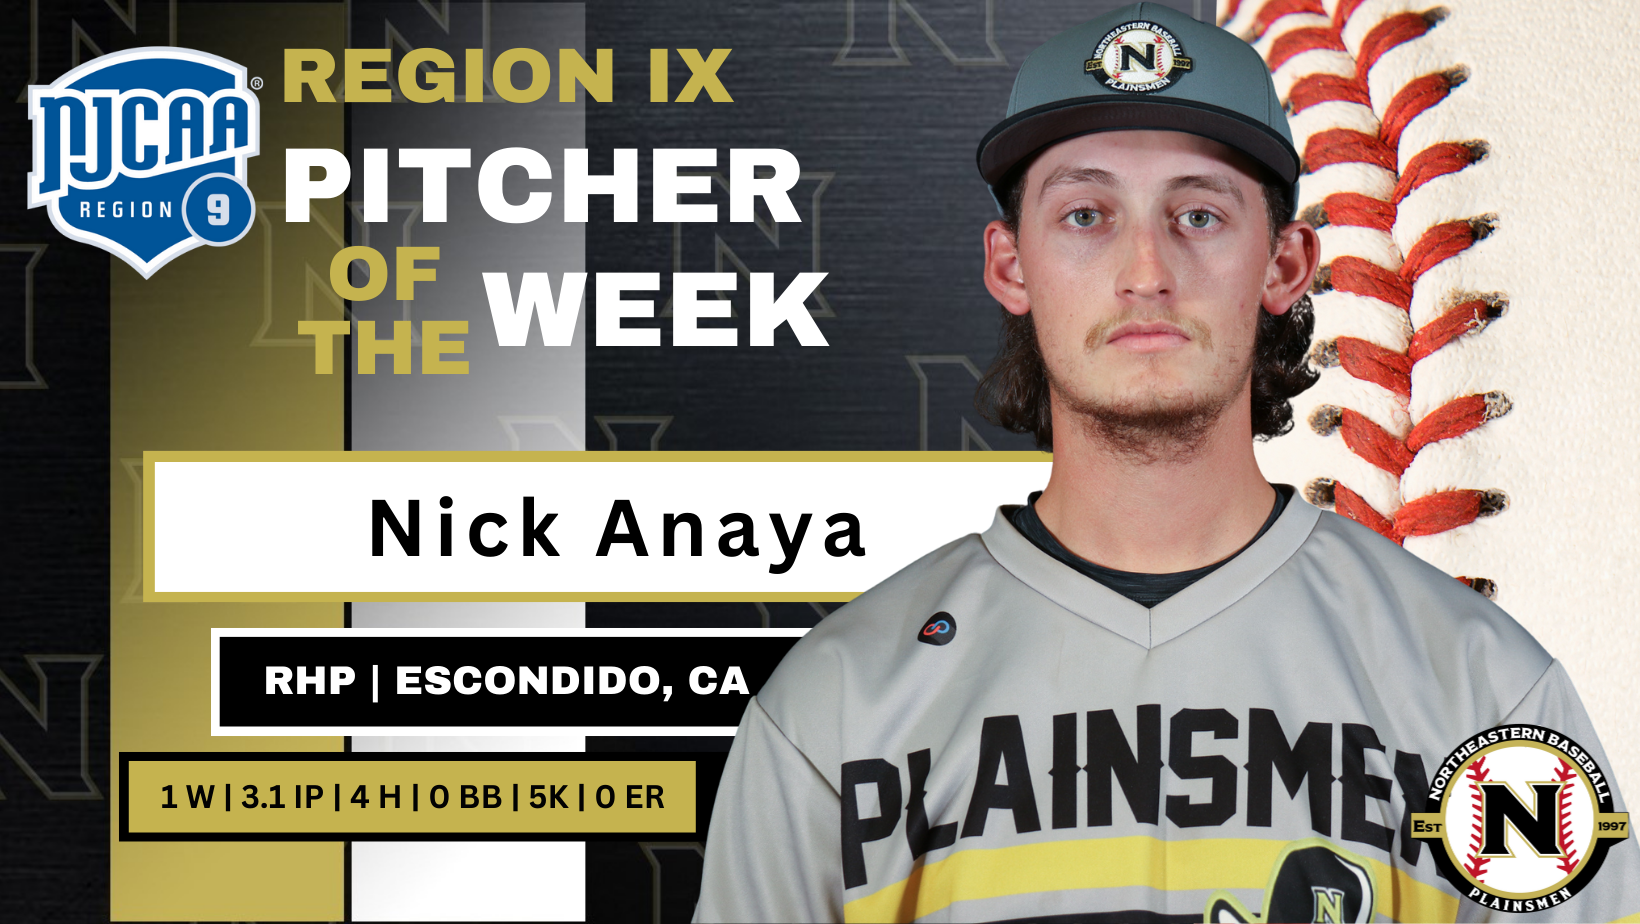 Nick Anaya Gets Region IX Pitcher of the Week